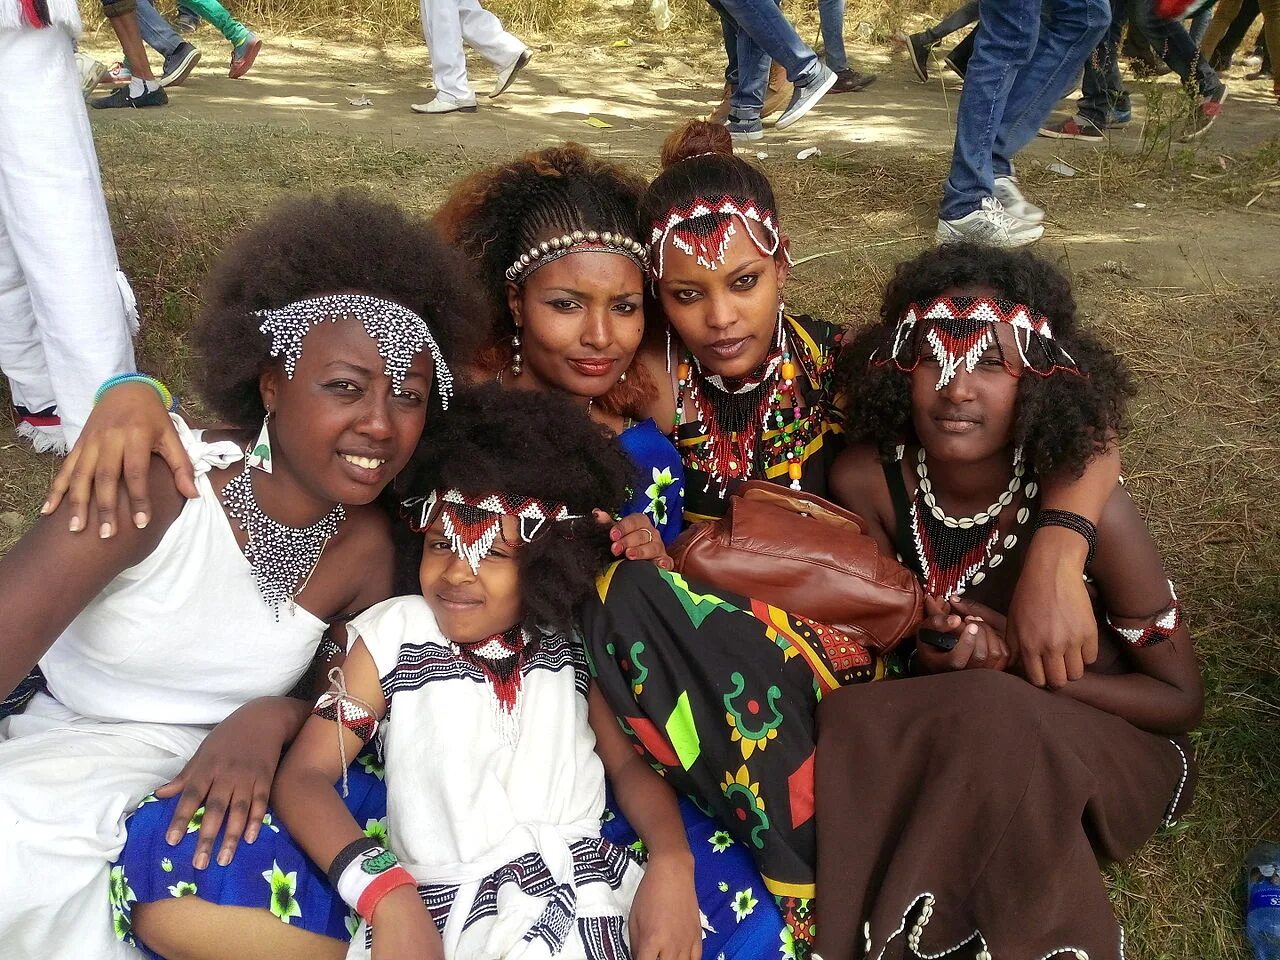 Этнические коллективы. Оромо народ Африки. Оромо Эфиопия. Народ оромо в Эфиопии. Племя оромо.